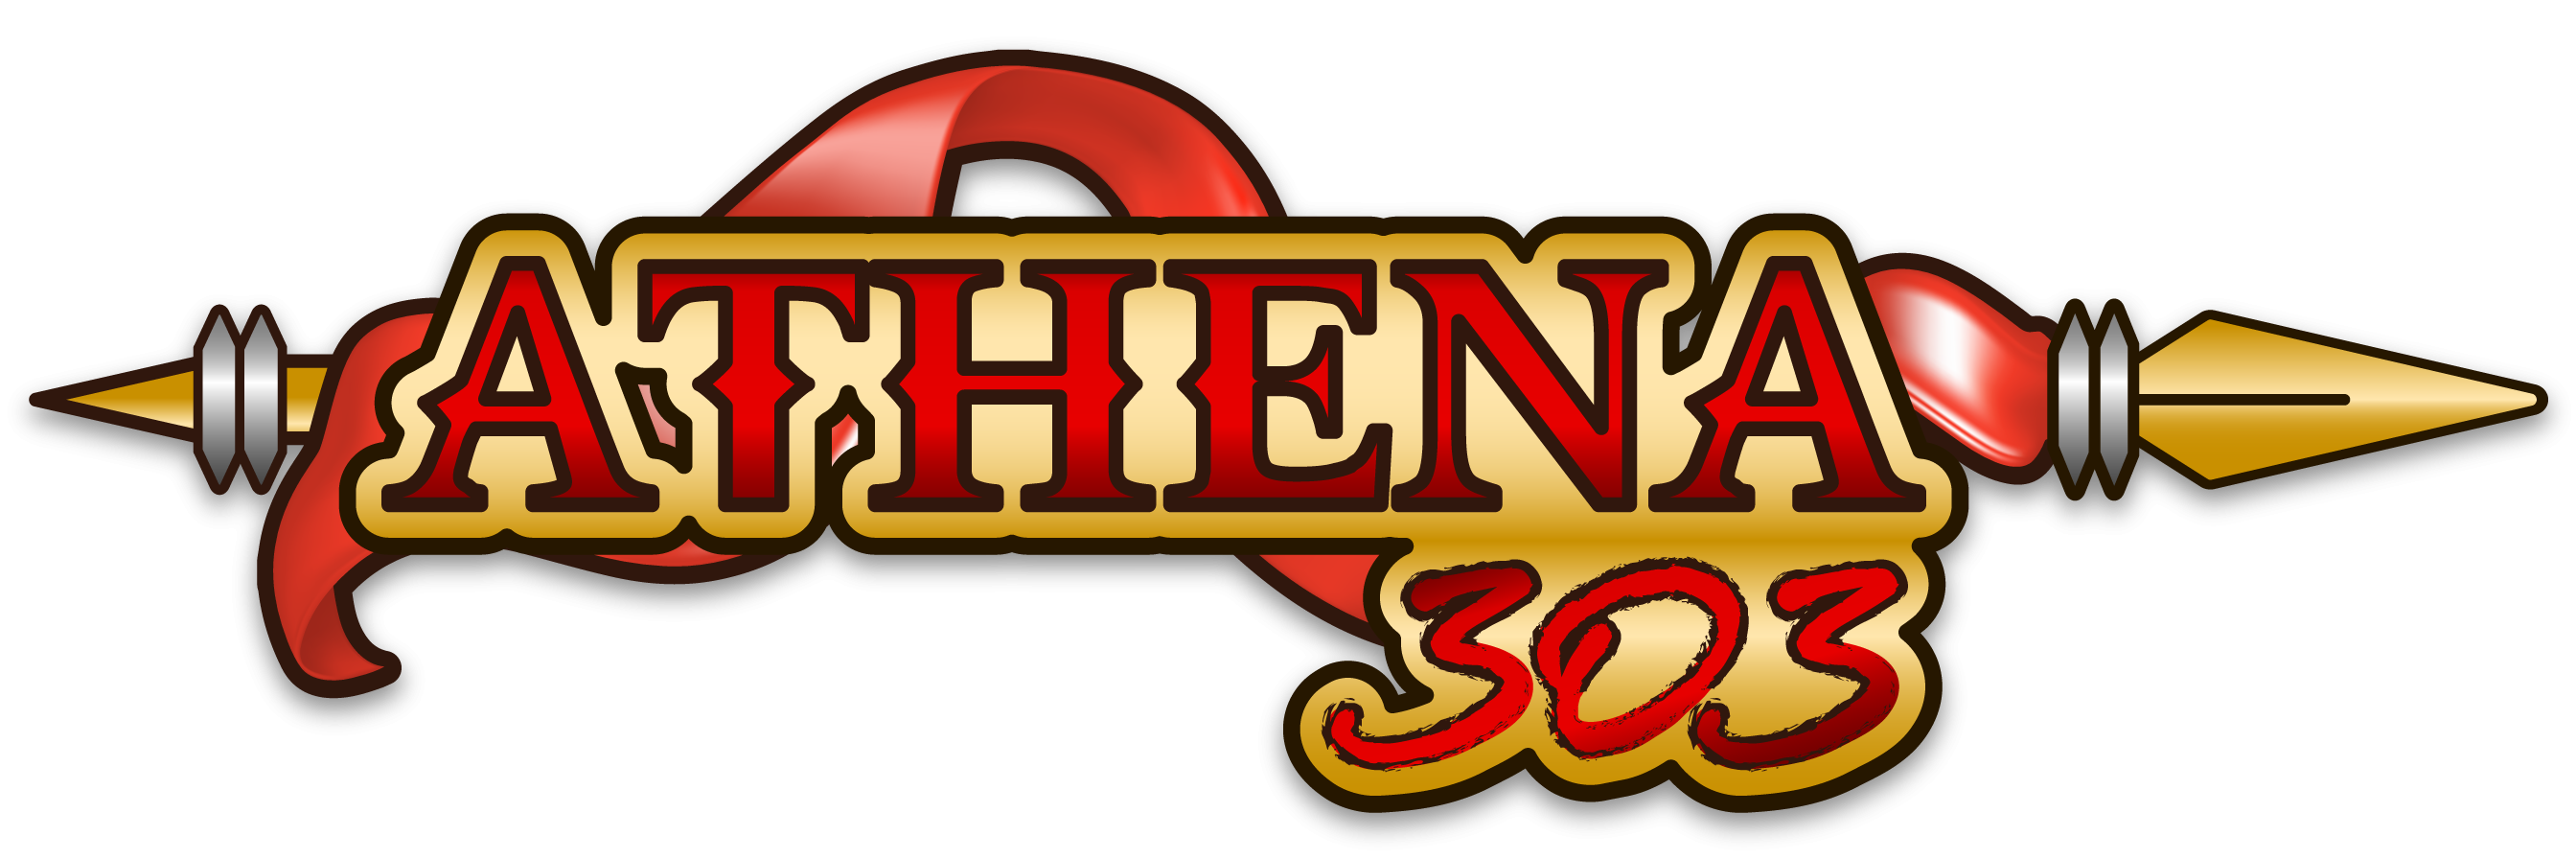 Casino Athena303